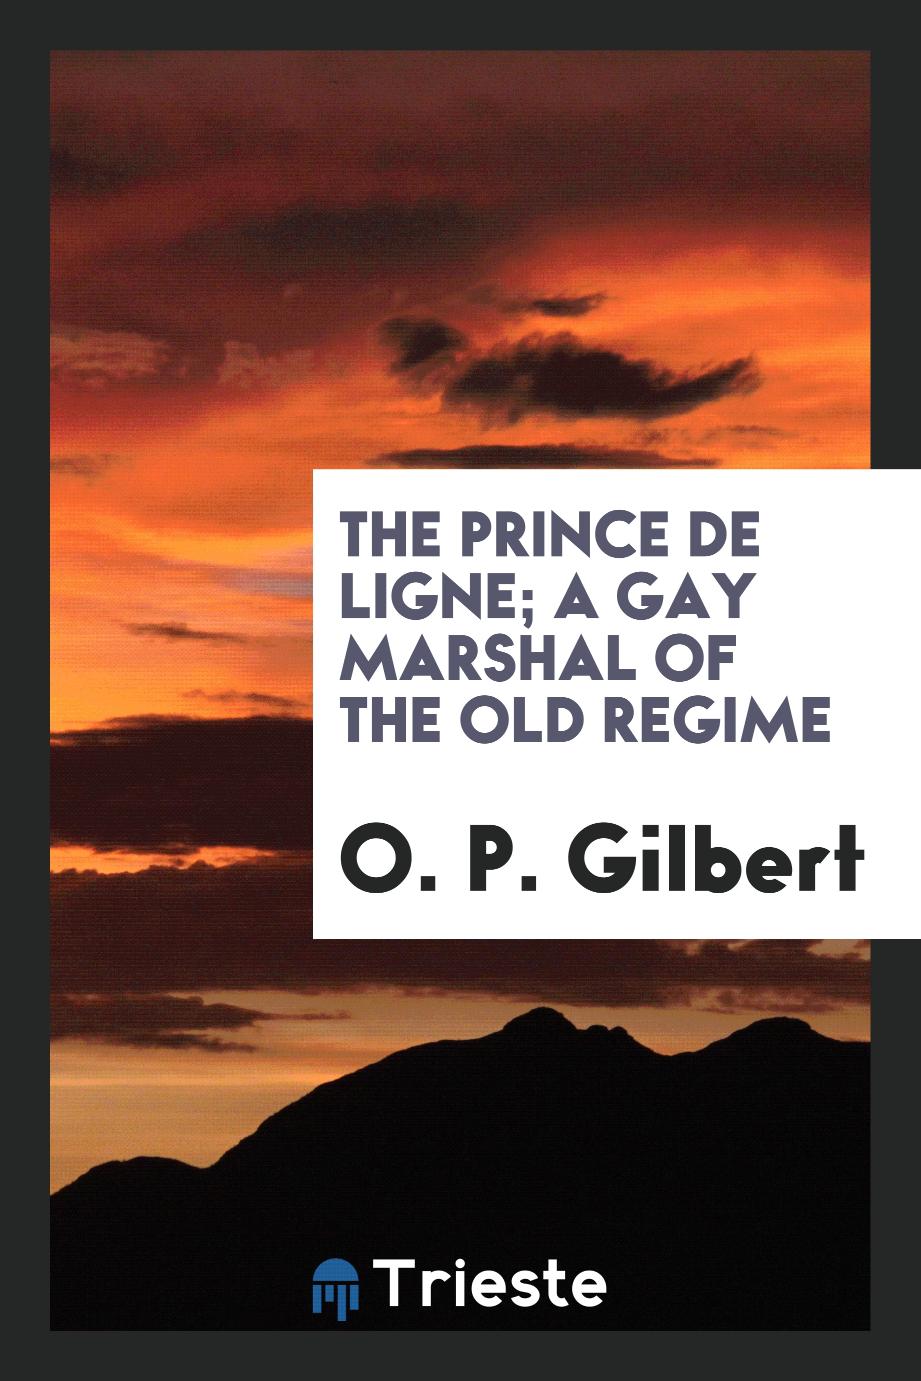 The Prince de Ligne; a gay Marshal of the old regime